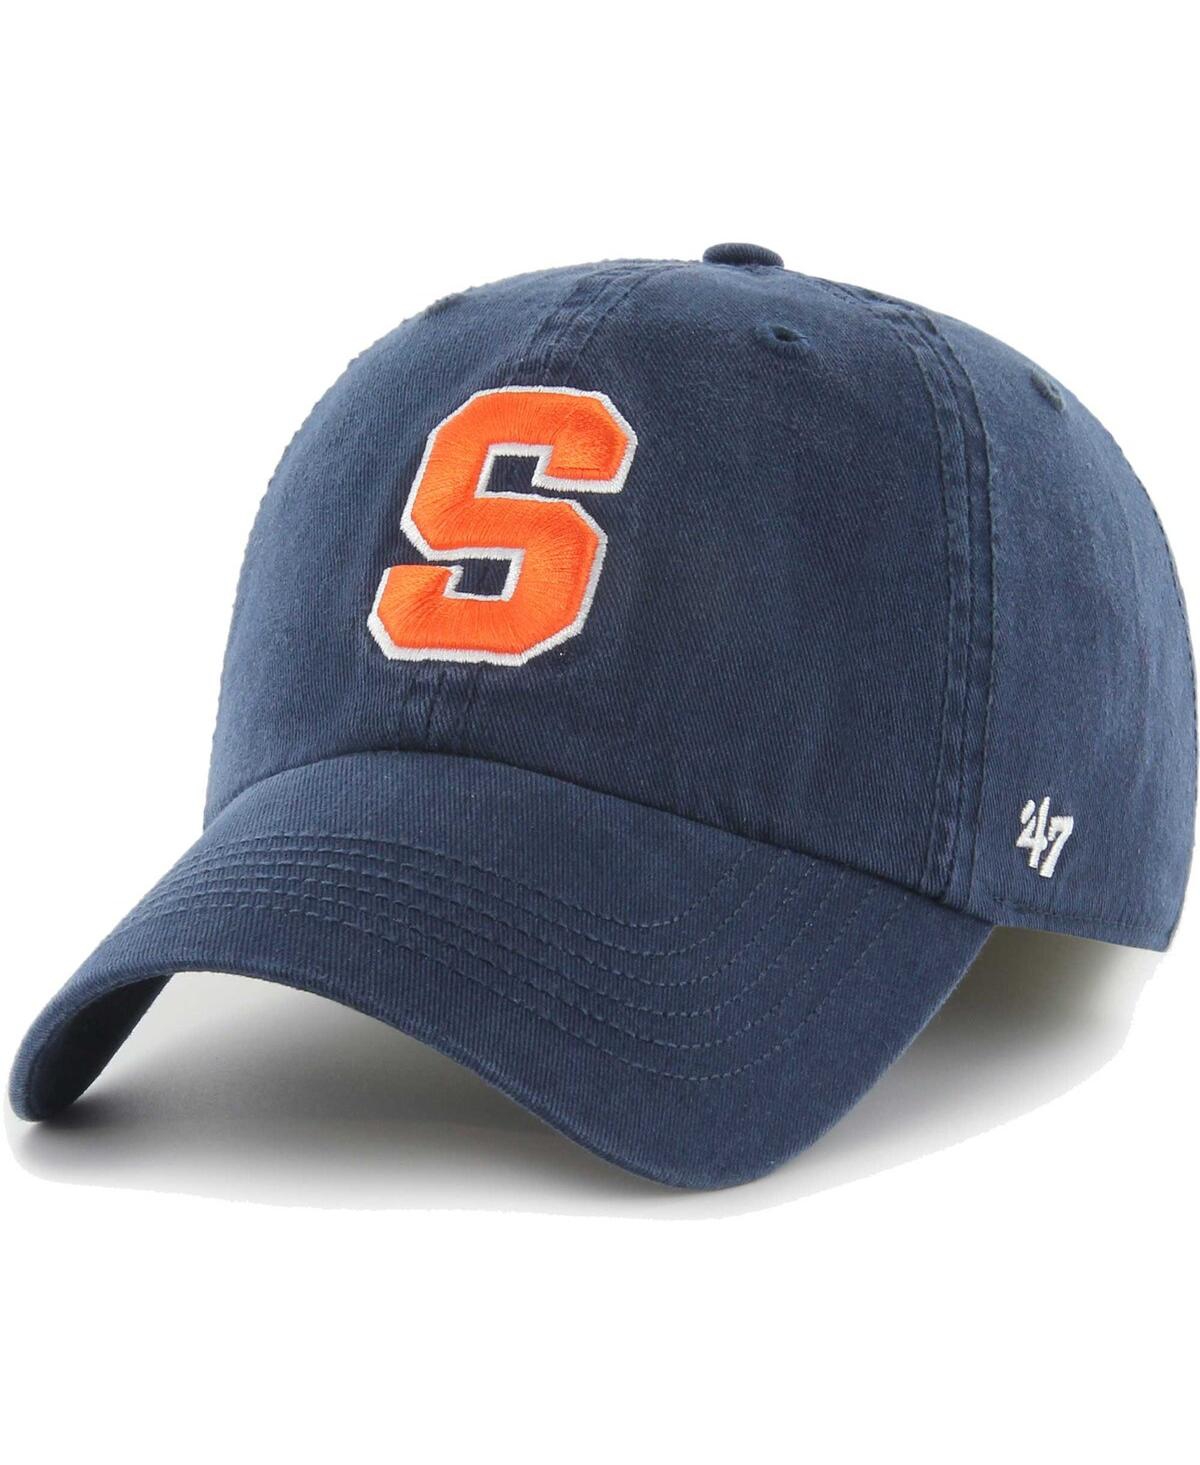 47 Brand Men's ' Navy Syracuse Orange Franchise Fitted Hat